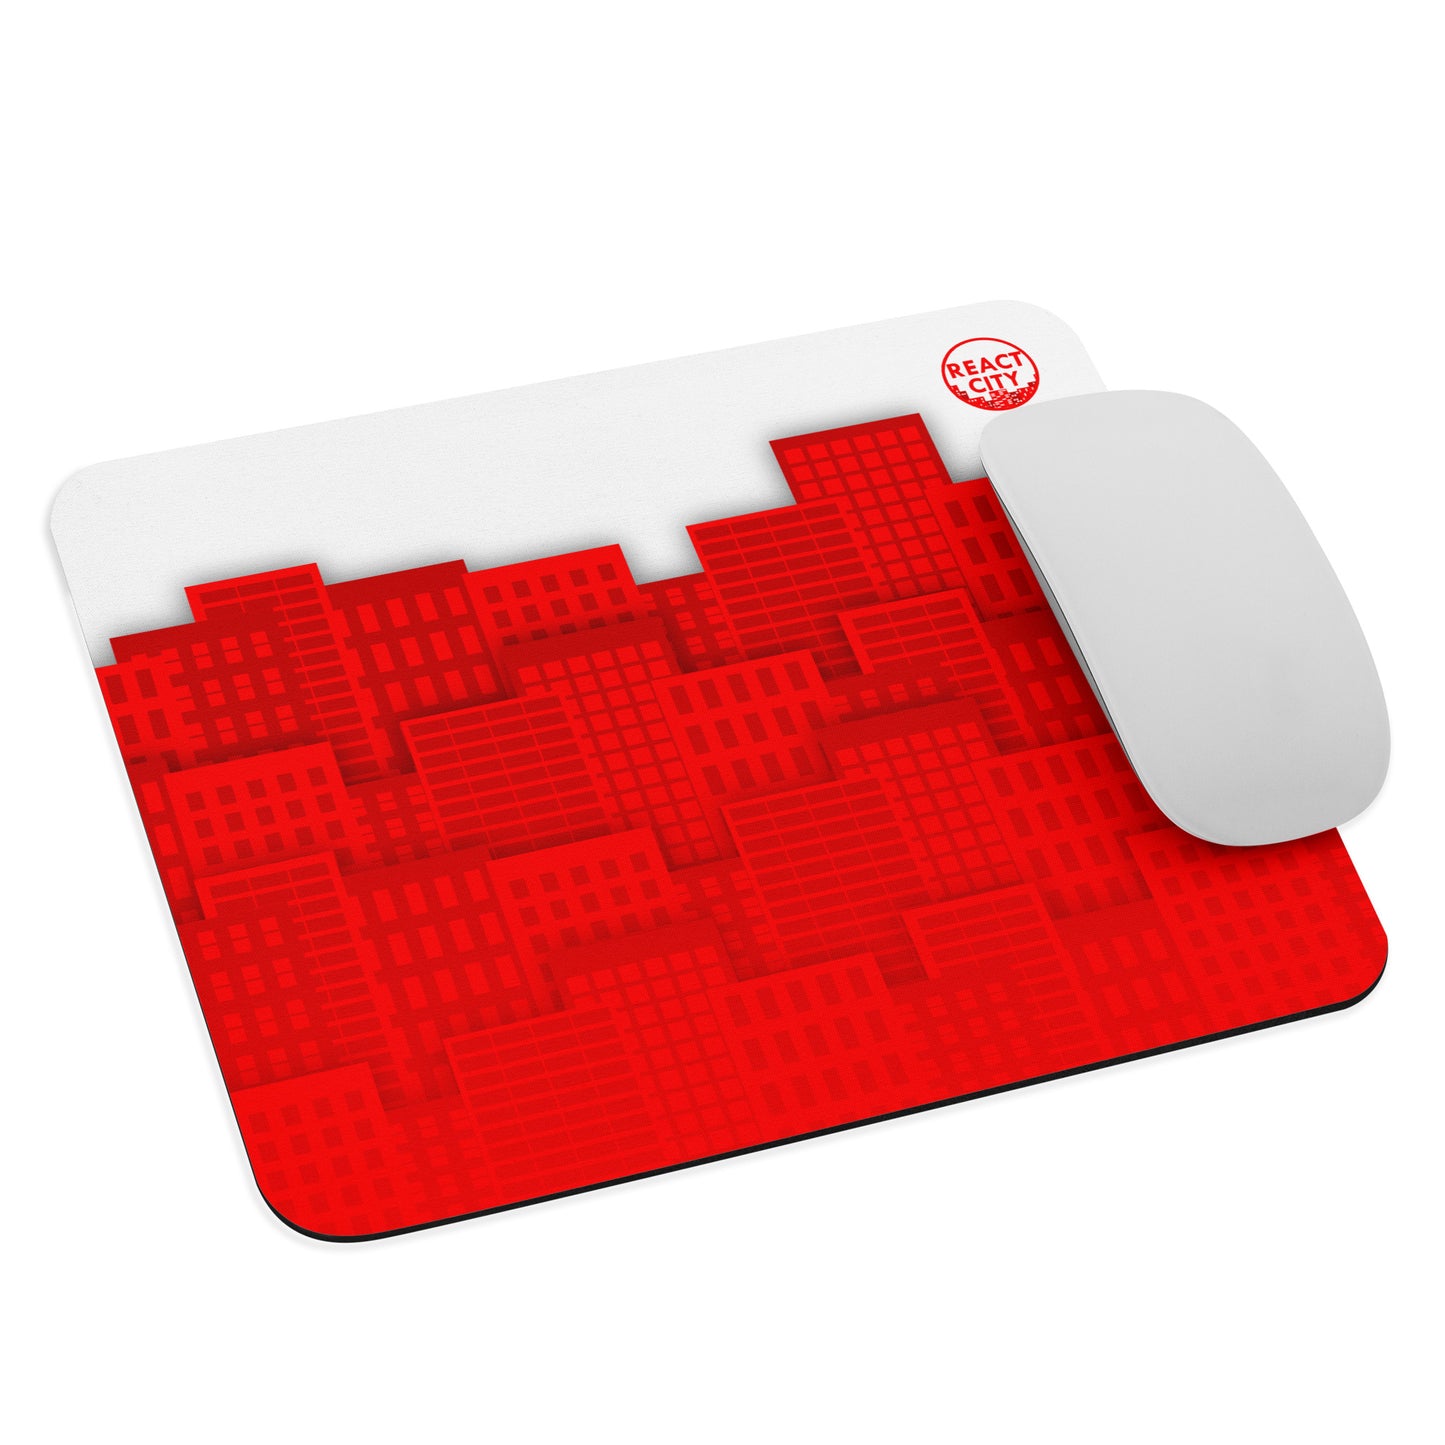 Cityscape - Mouse pad - 8.7"x7.1"